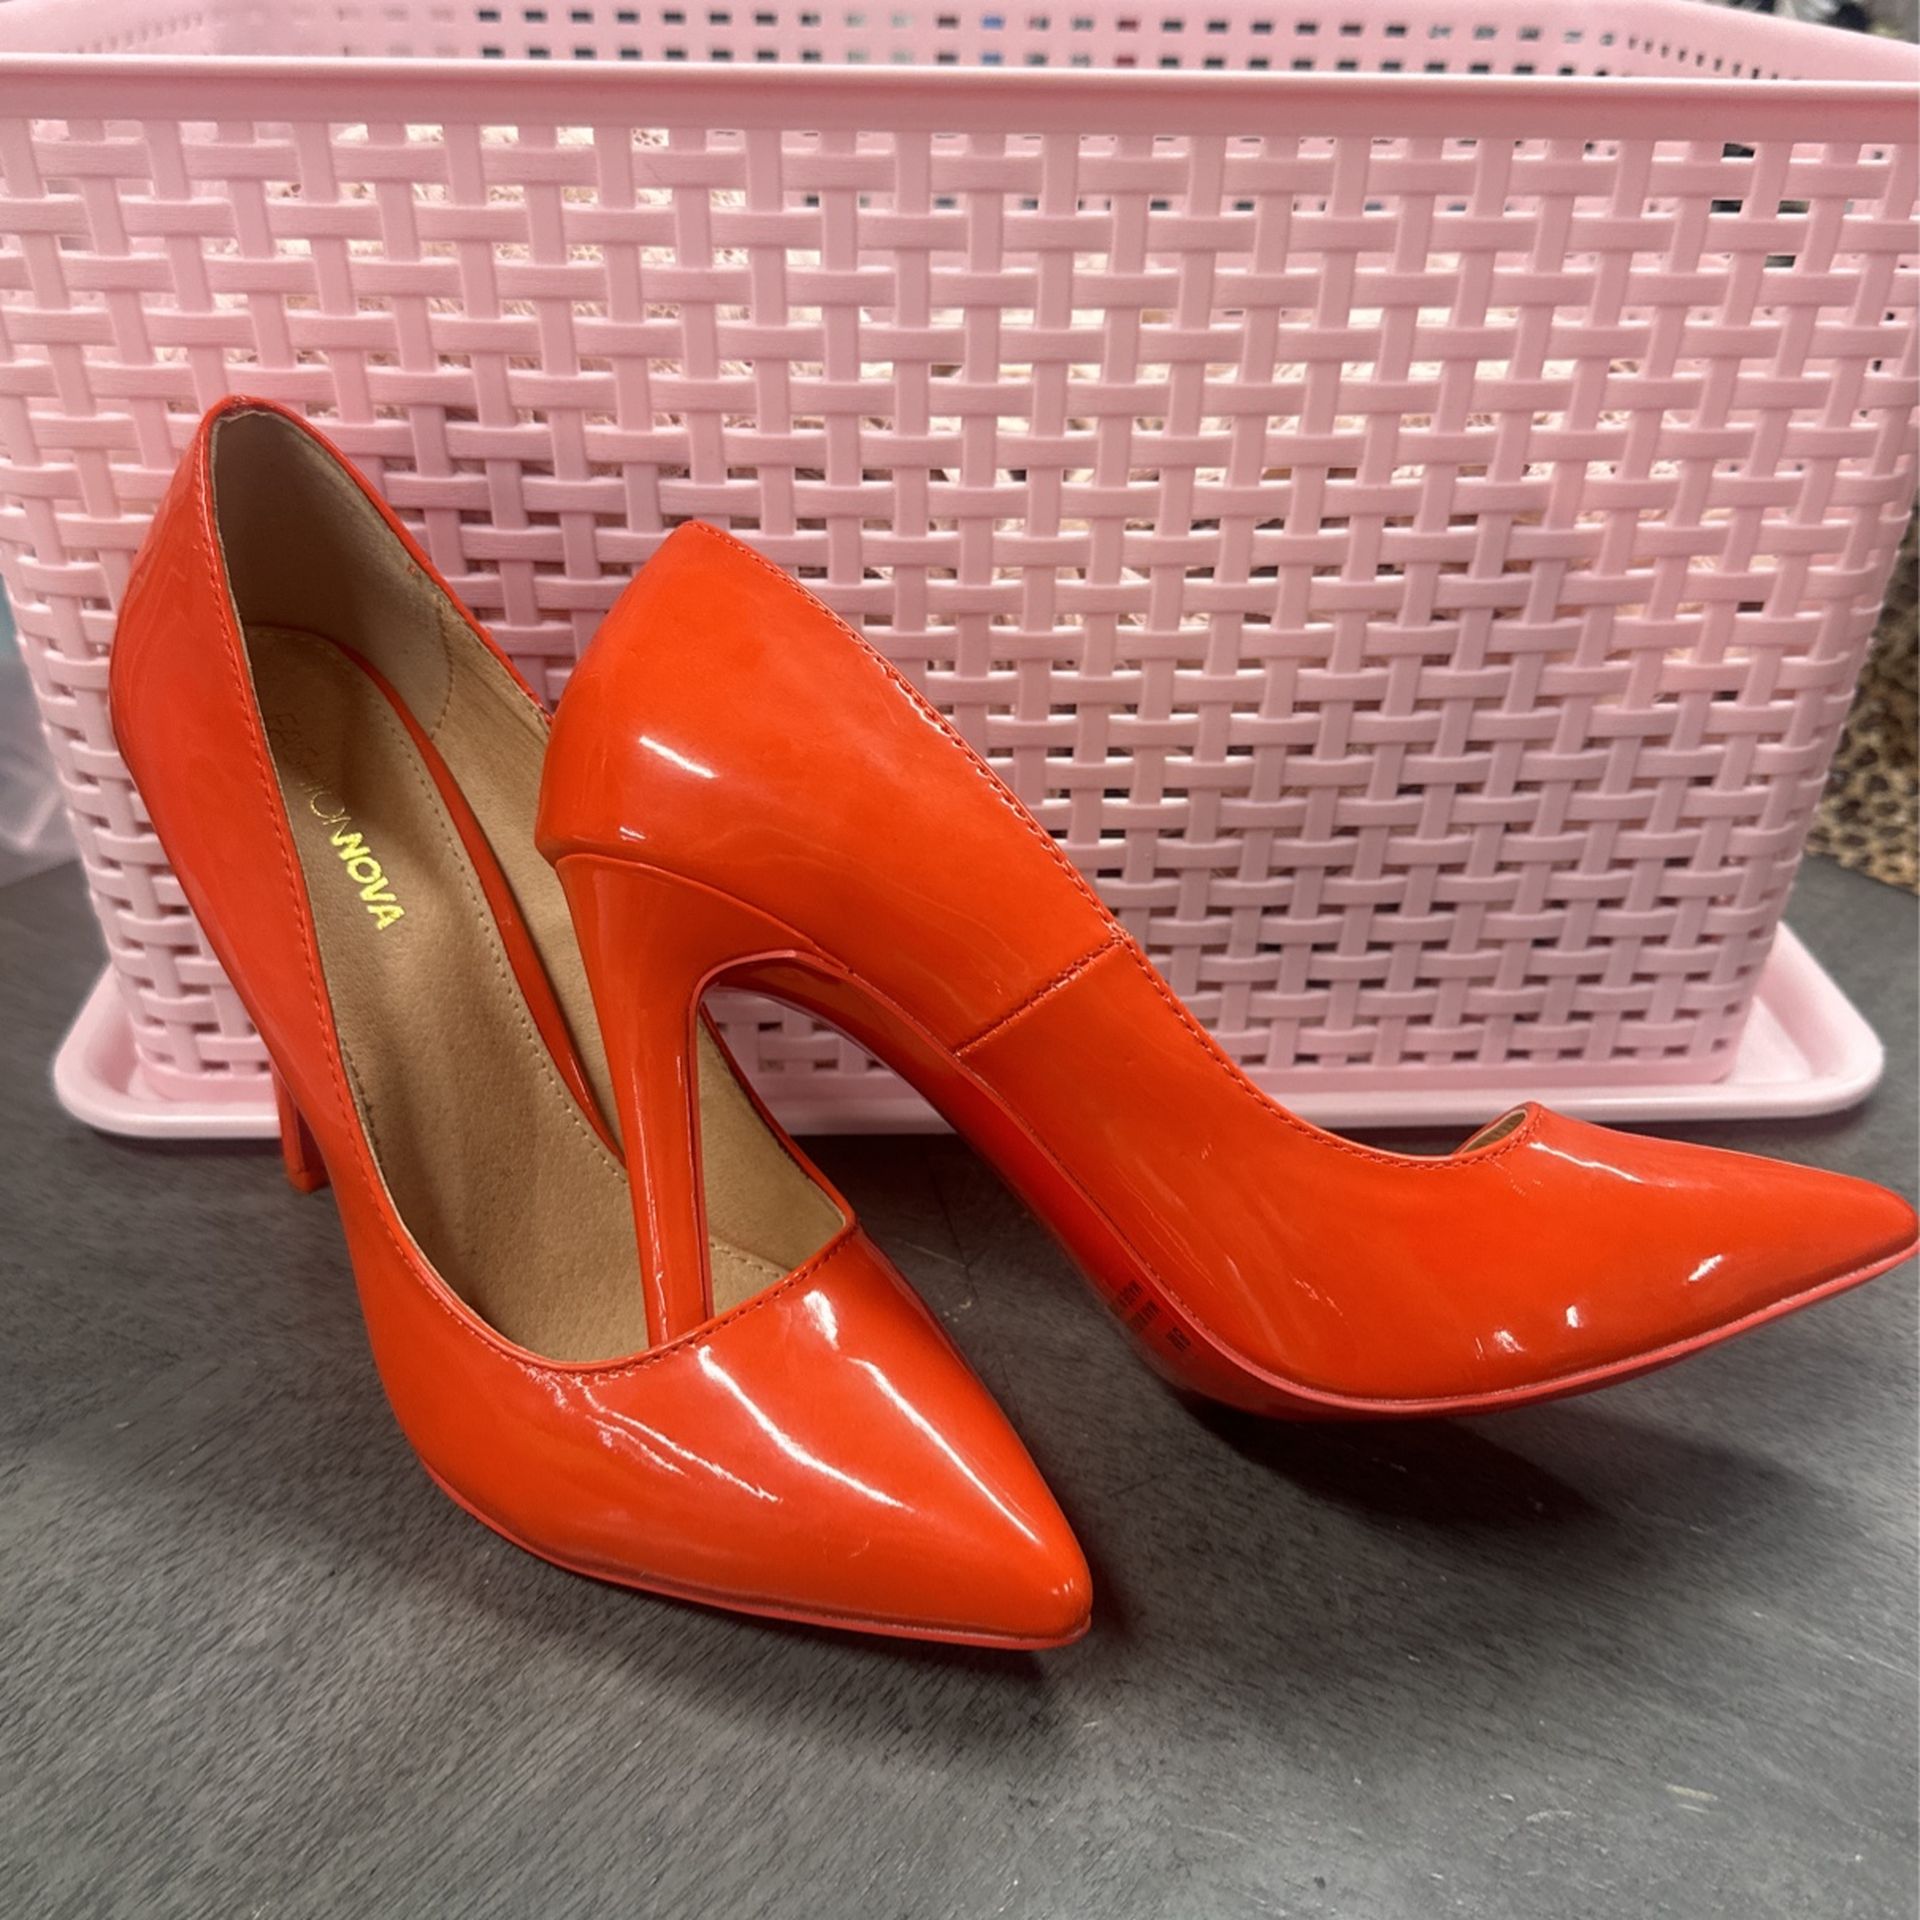 Fashion Nova orange heels 